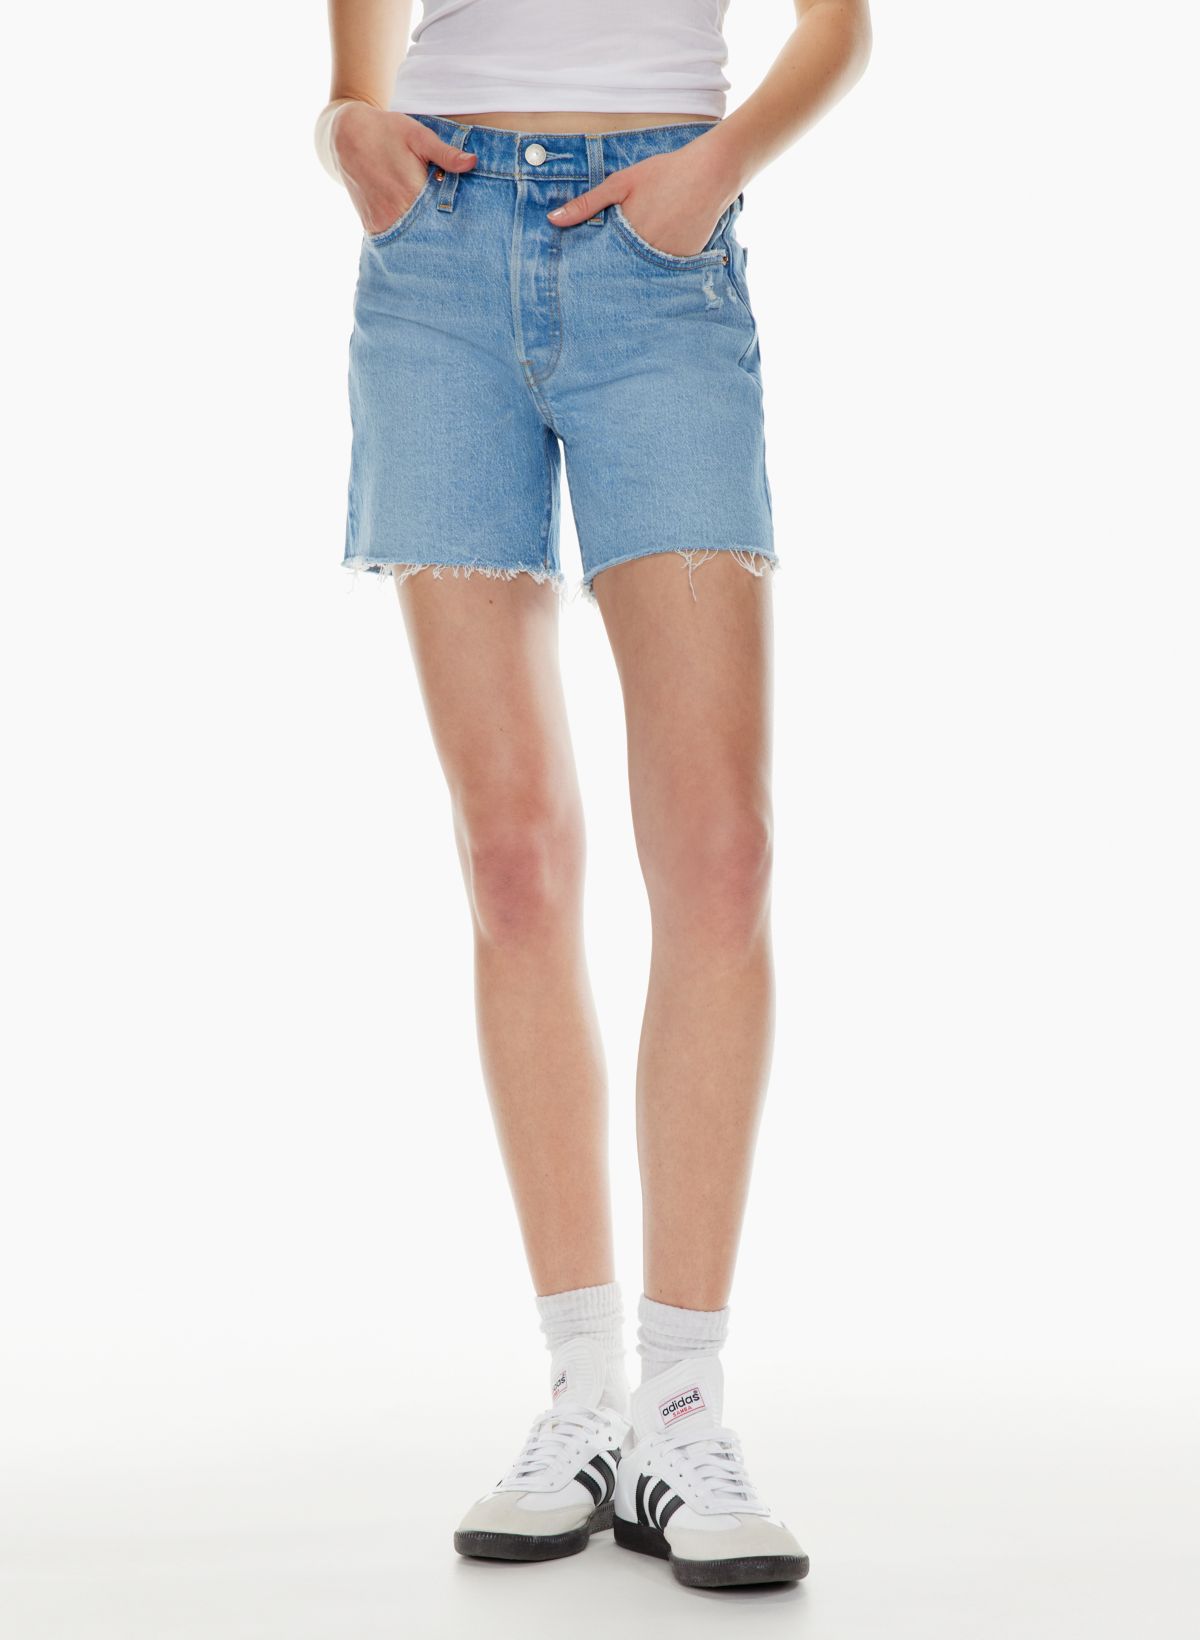 Levi's Cotton 501 Mid-Thigh Distressed Denim Shorts - Macy's